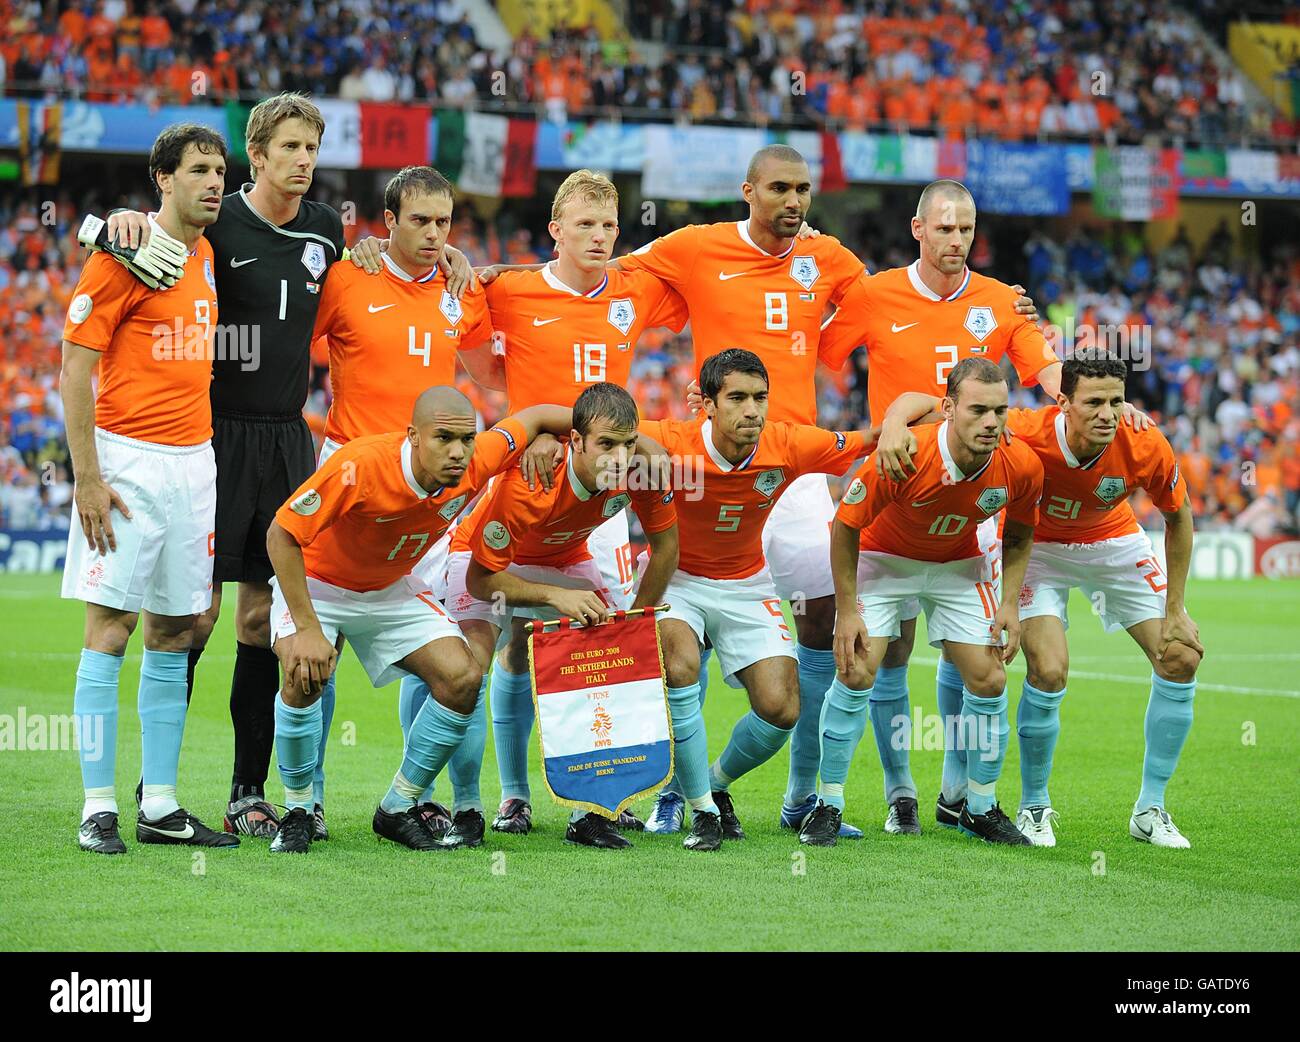 Fußball - Europameisterschaft 2008 - Gruppe C - Holland / Italien - Stade  de Suisse Stockfotografie - Alamy